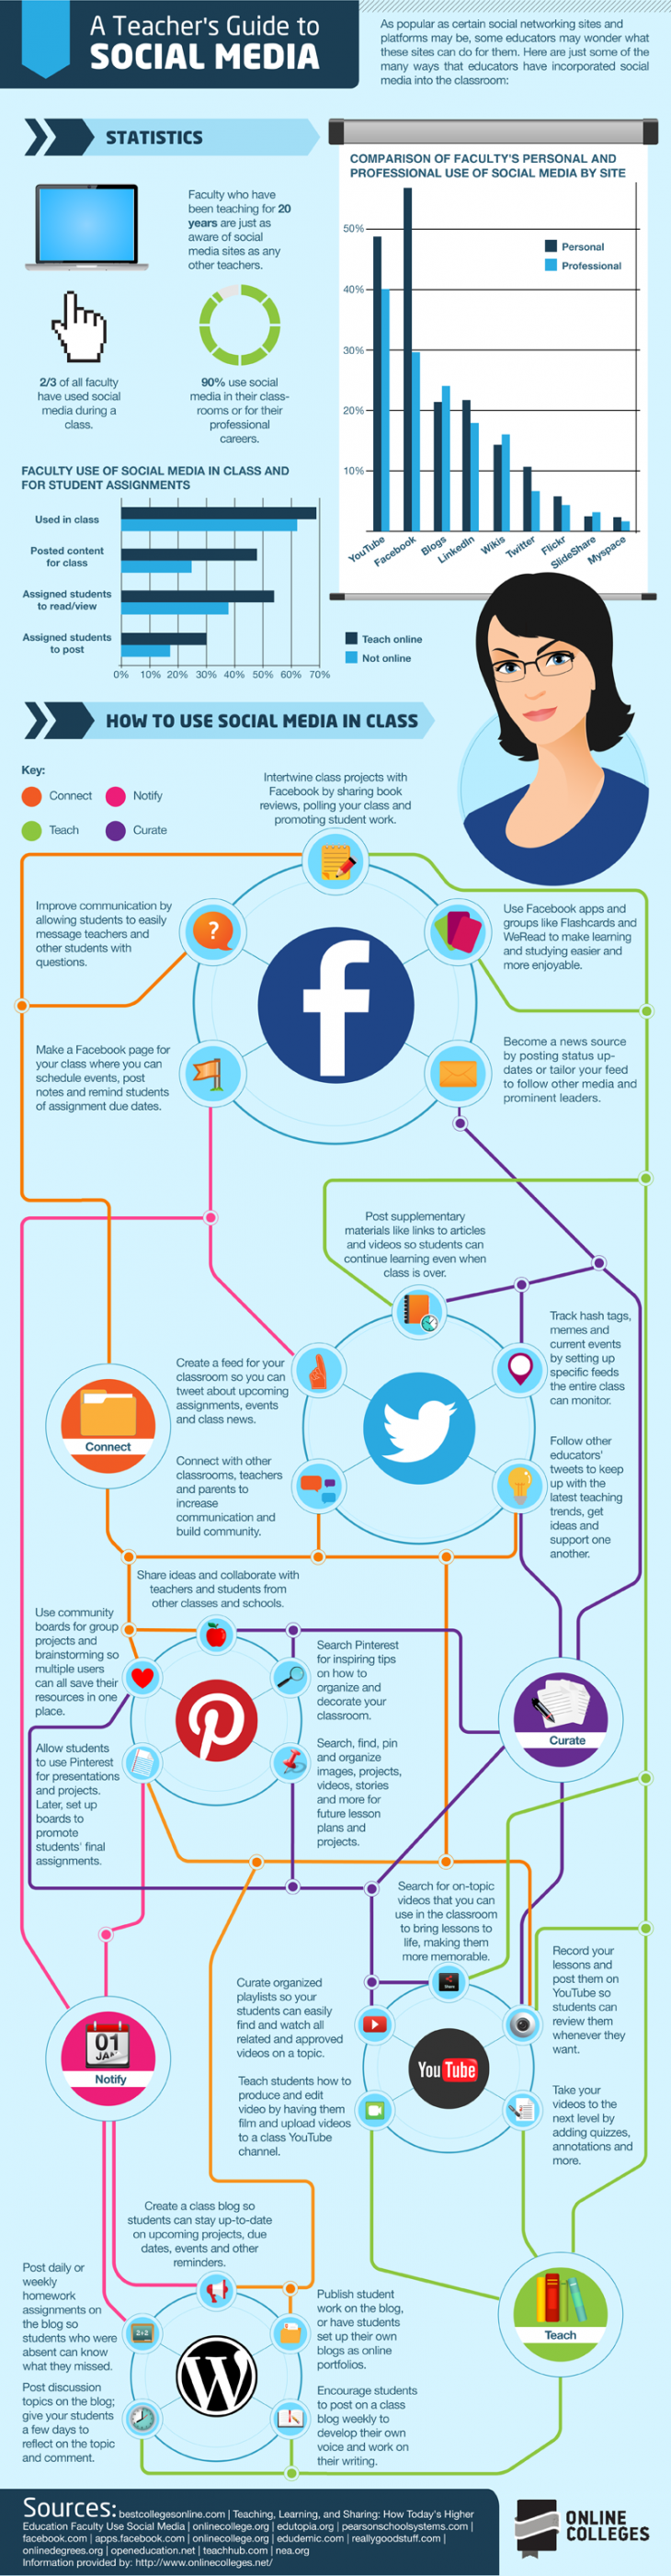 25 ways teachers can integrate social media into education